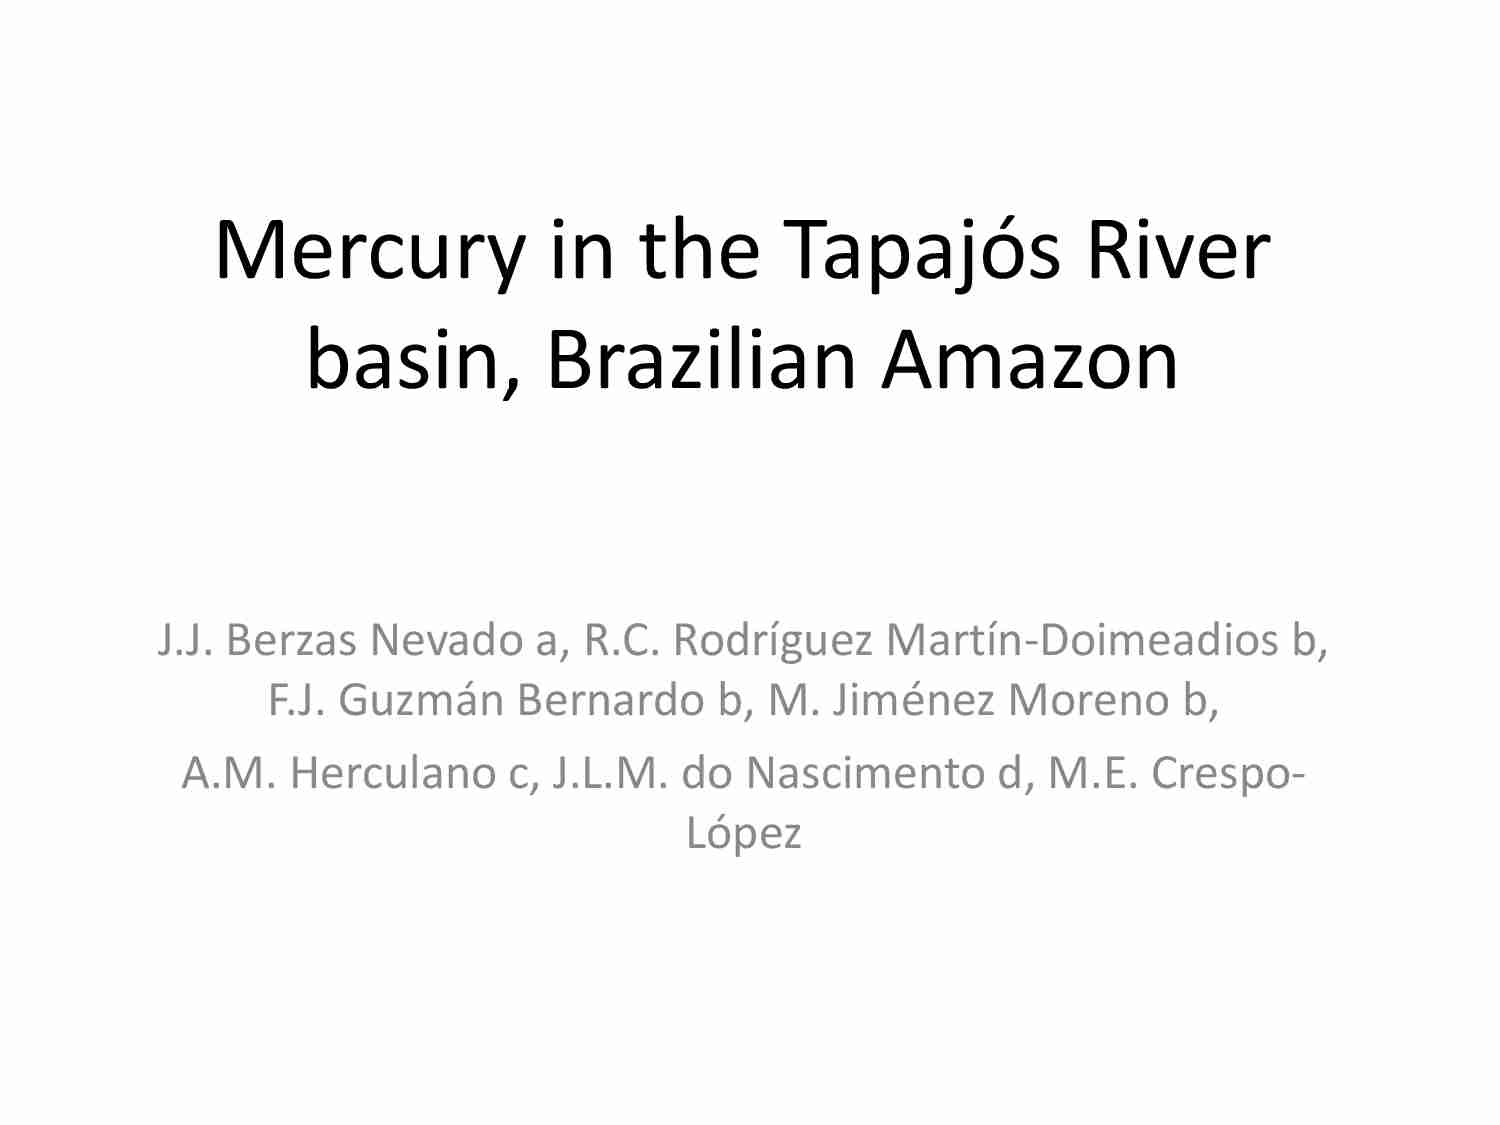 Rtęć - Brazilian Amazon - strona 1